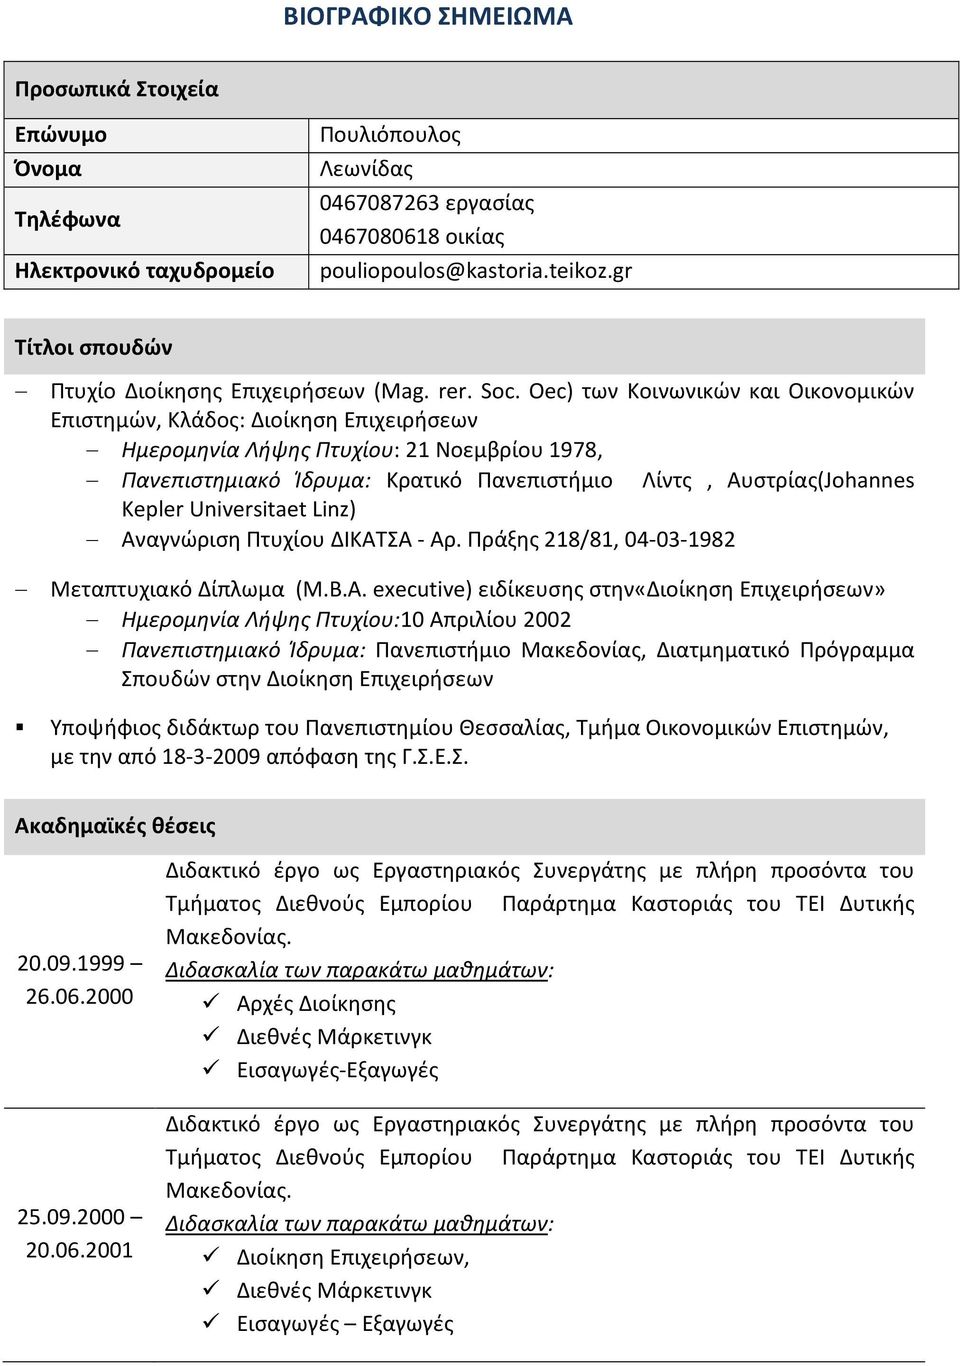 Oec) των Κοινωνικών και Οικονομικών Επιστημών, Κλάδος: Ημερομηνία Λήψης Πτυχίου: 21 Νοεμβρίου 1978, Πανεπιστημιακό Ίδρυμα: Κρατικό Πανεπιστήμιο Λίντς, Αυστρίας(Johannes Kepler Universitaet Linz)